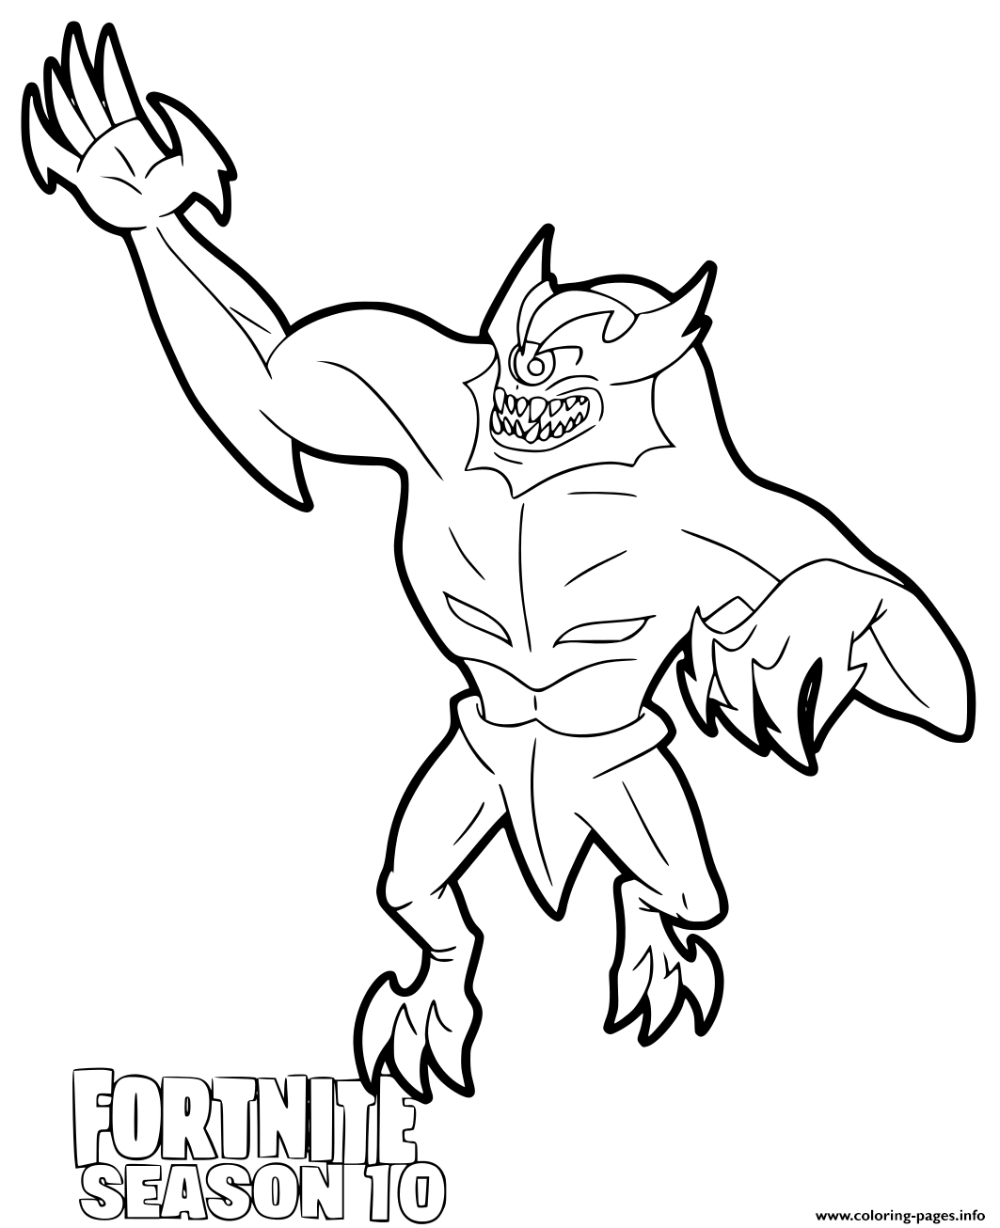 Print Ice Peak Monster Fortnite season 10 coloring pages | Coloring pages,  Fortnite, Printable coloring pages